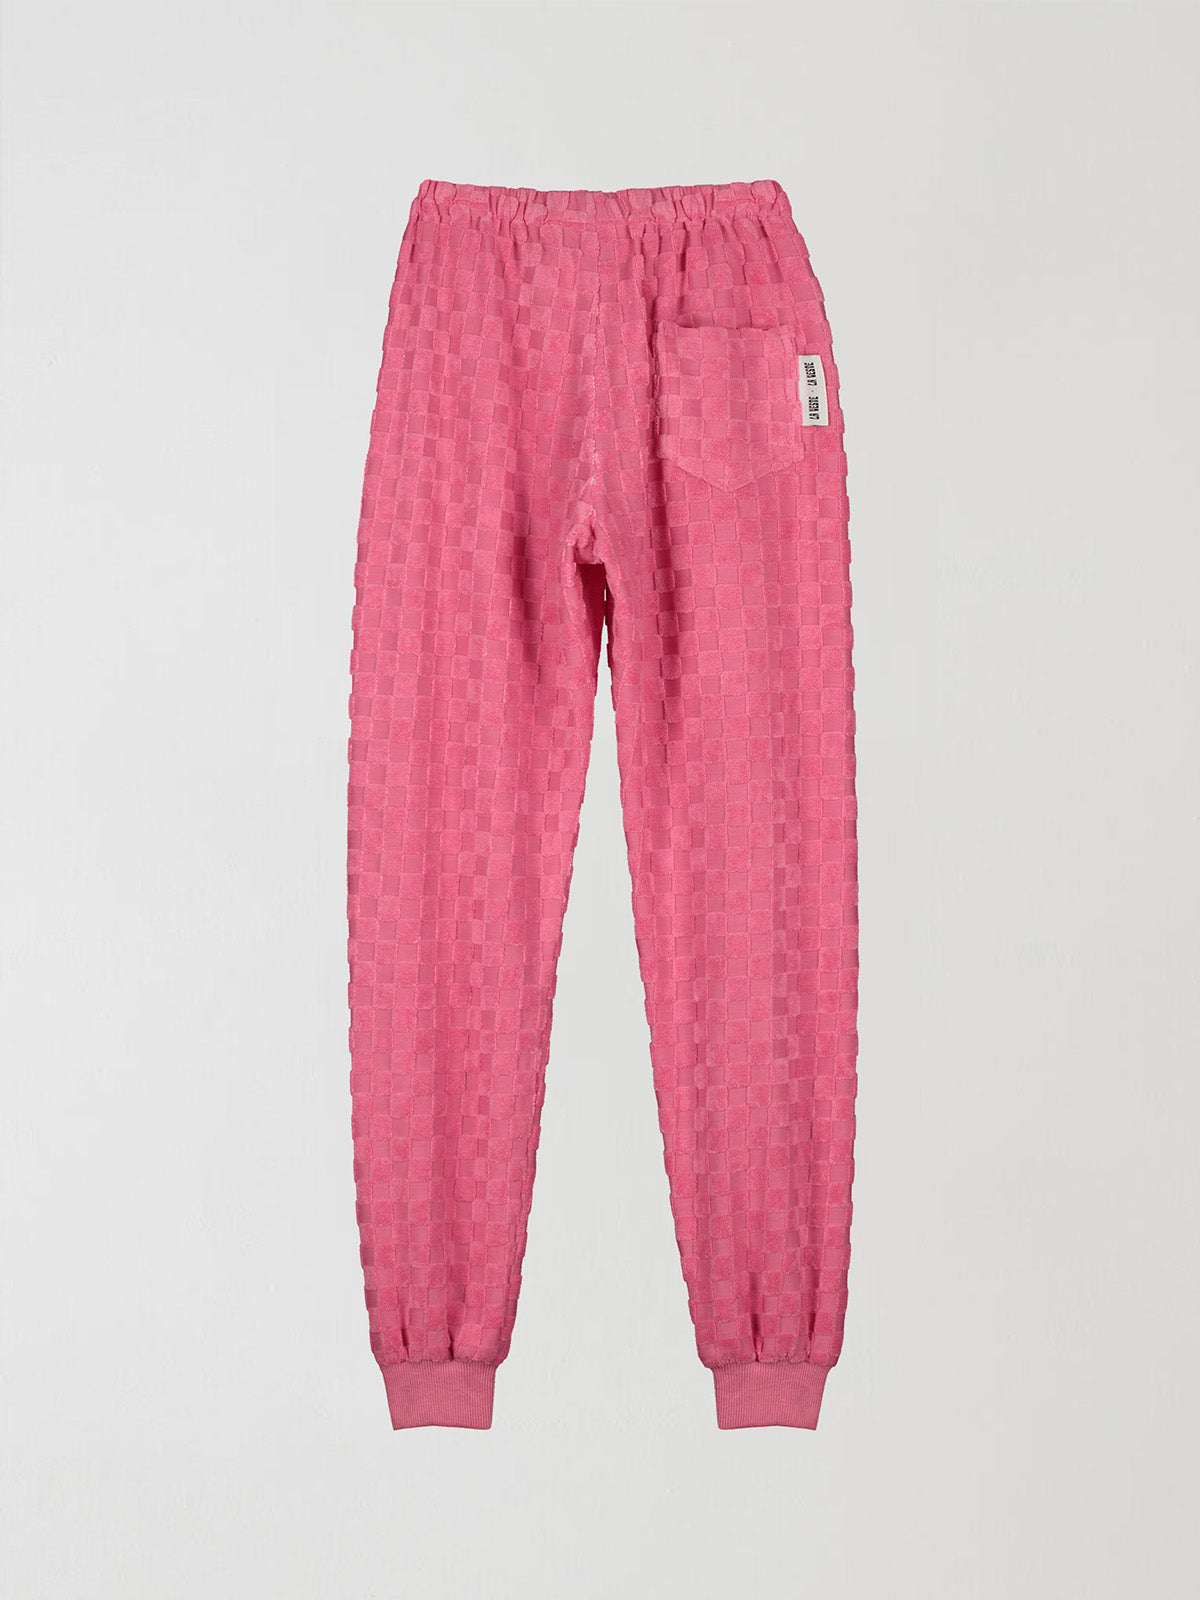 Pink Chess Pants